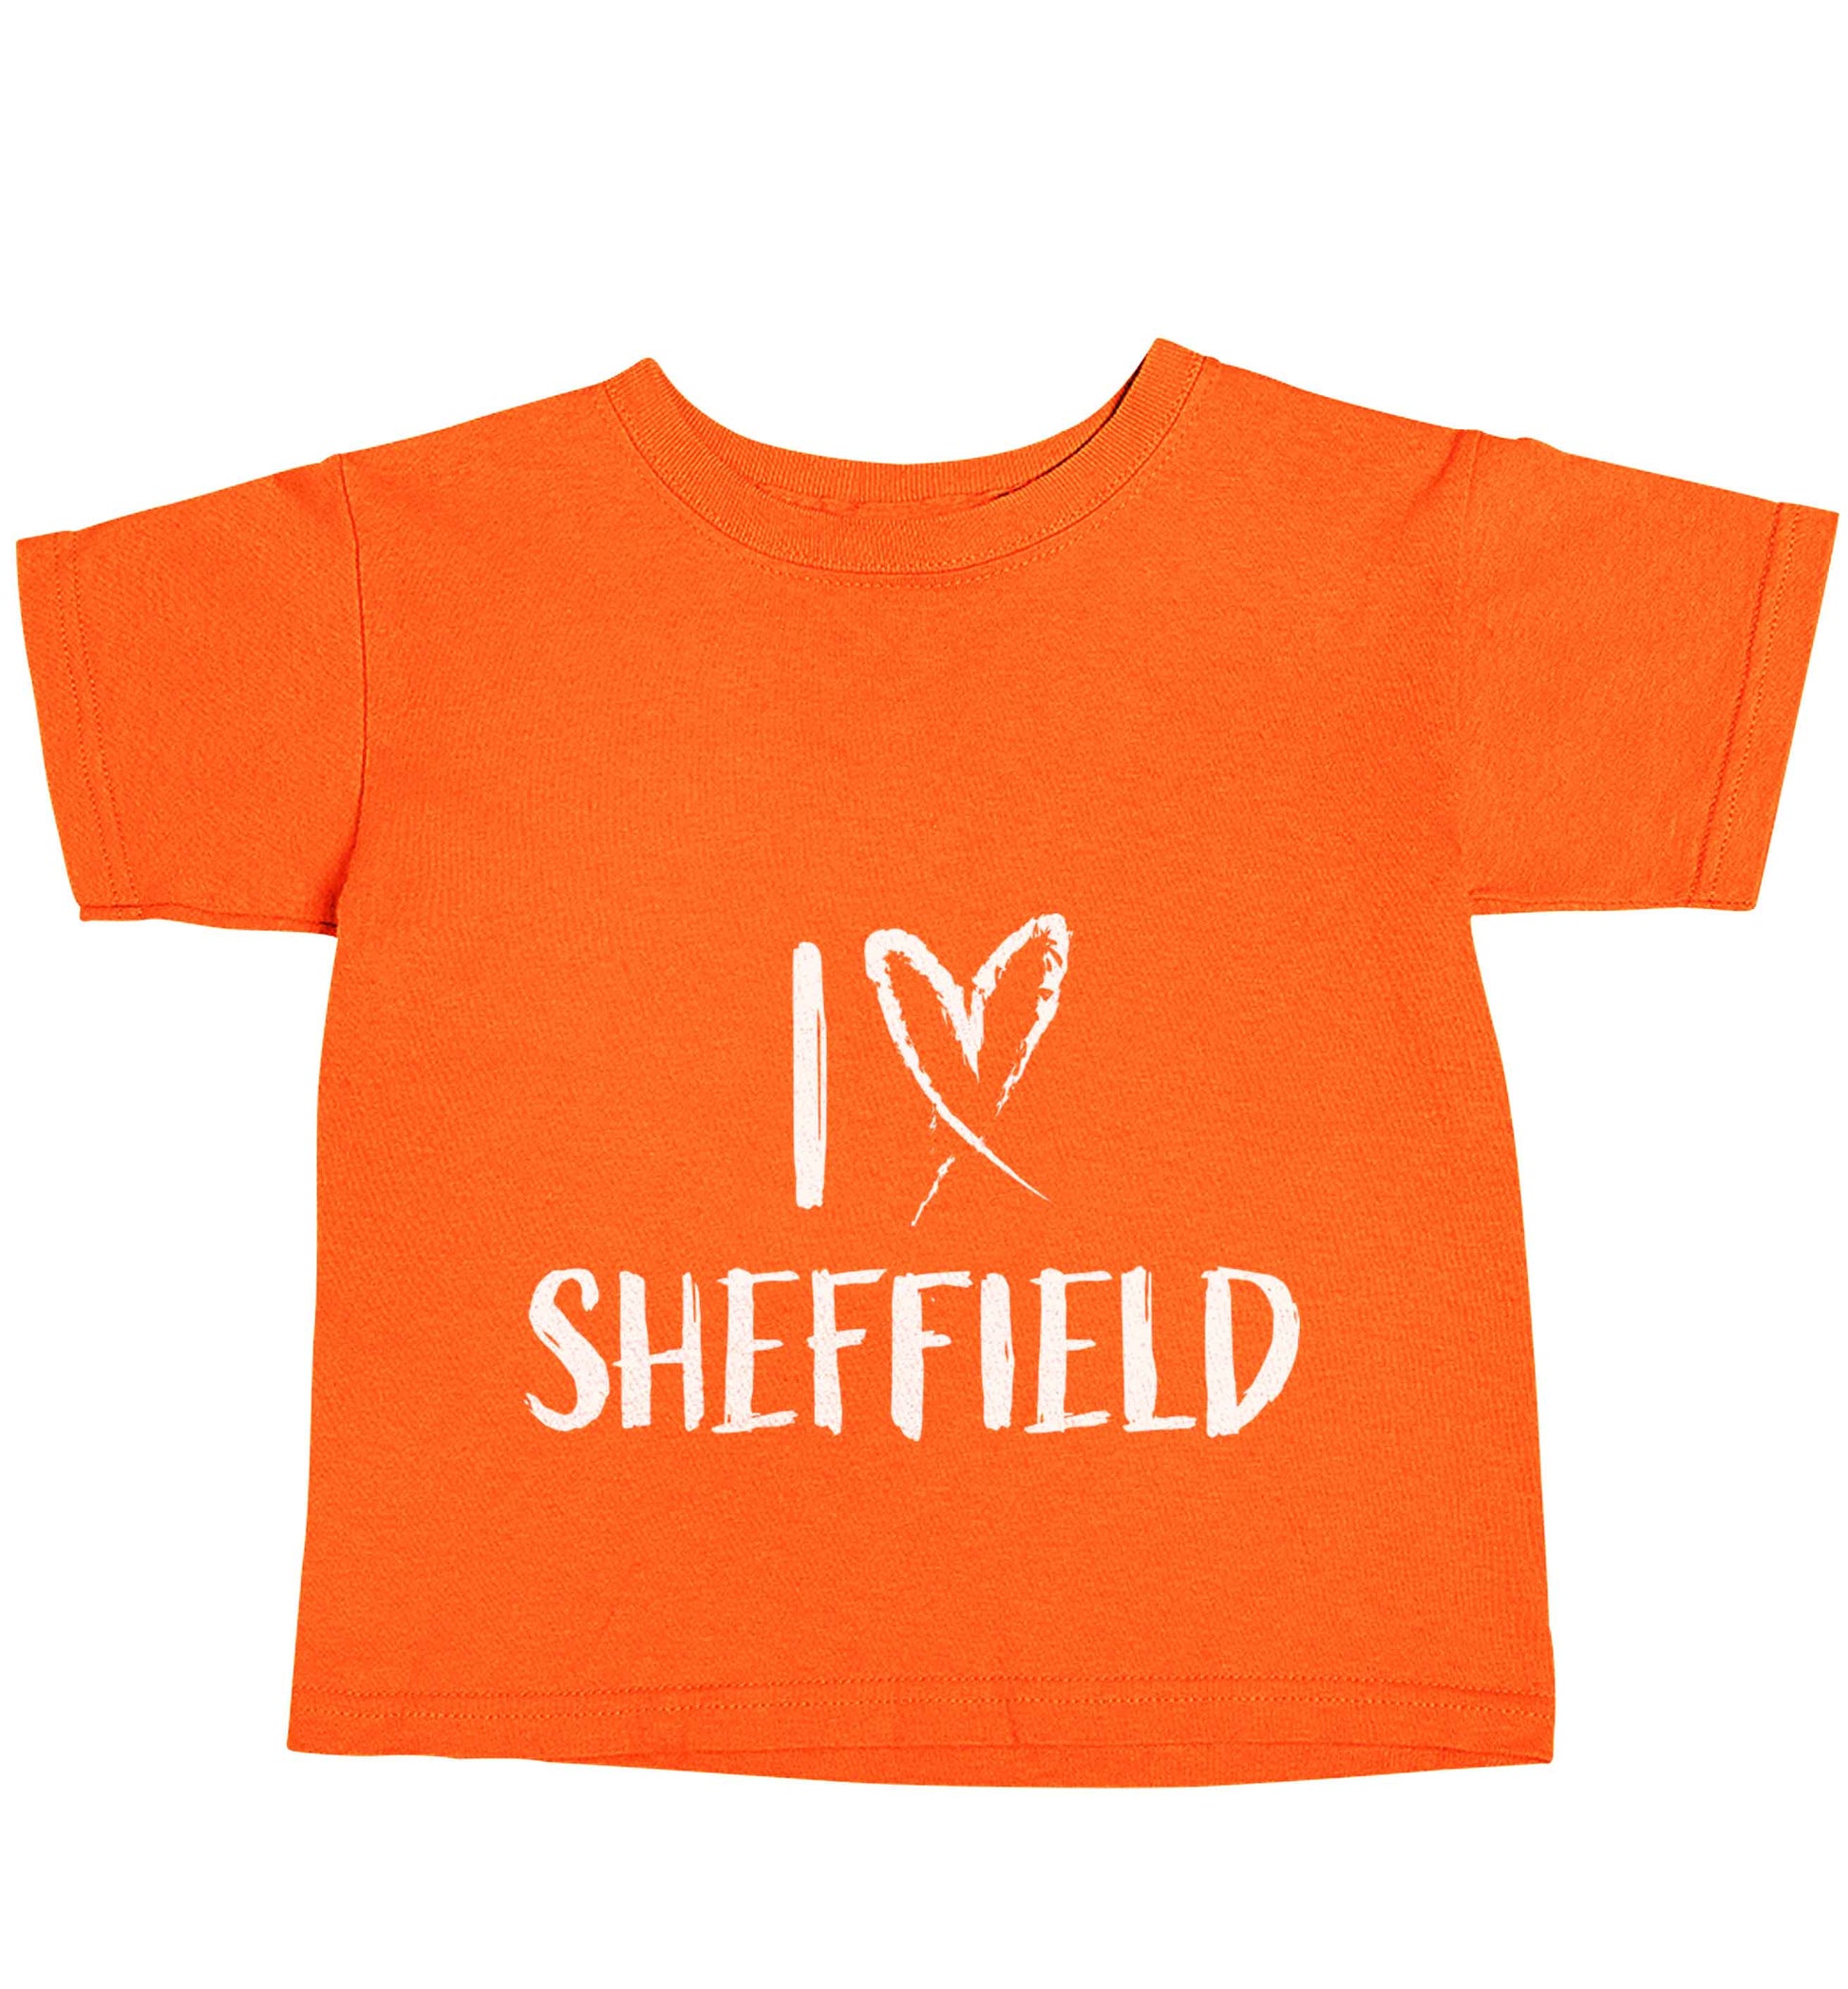 I love Sheffield orange baby toddler Tshirt 2 Years